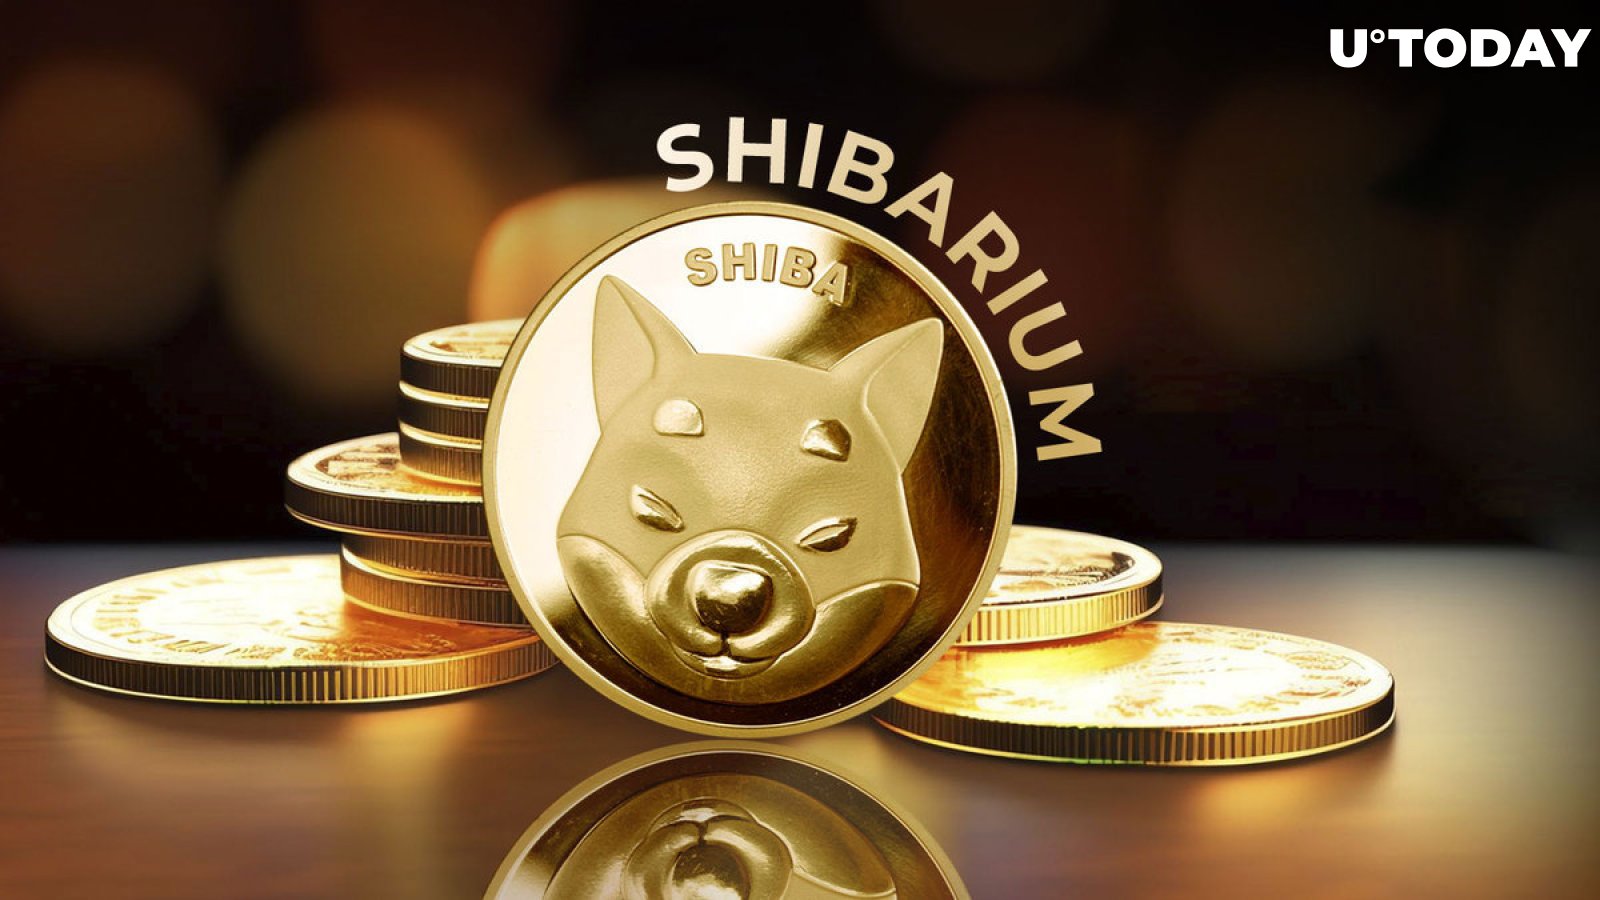 SHIB Community Starts Epic Shibarium Integration Campaign